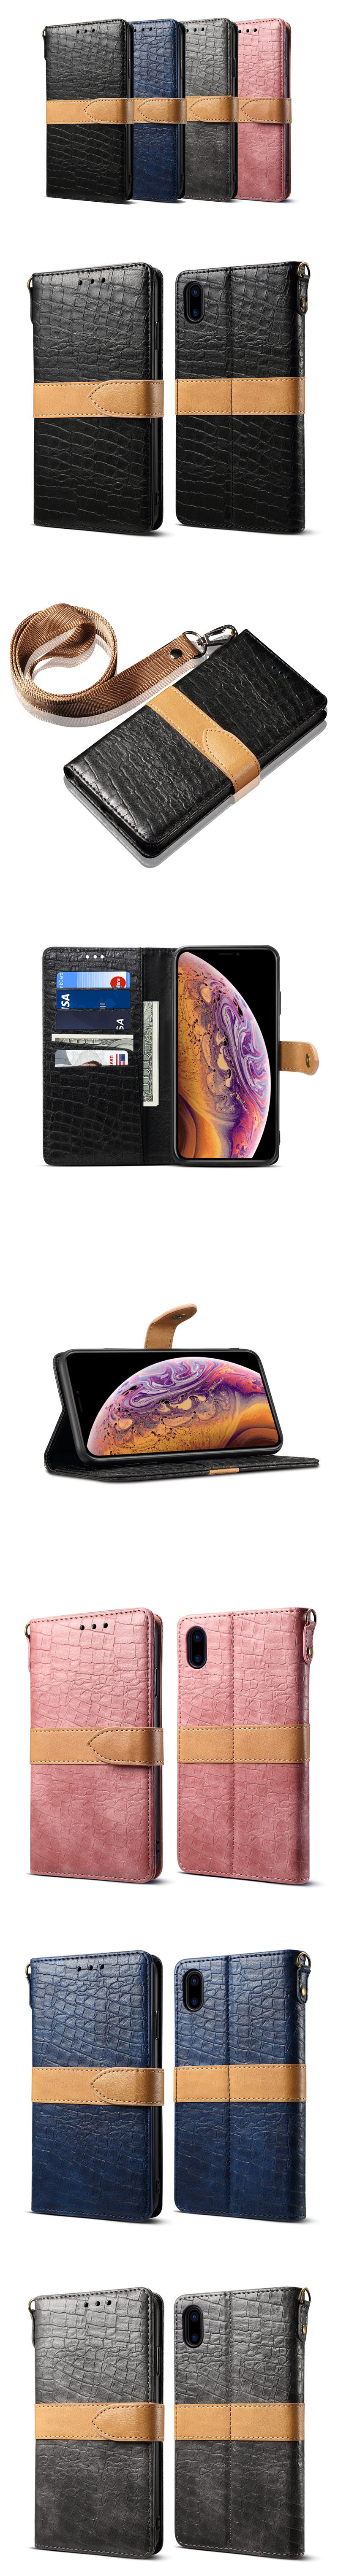 330-Apple-掛繩鱷魚壓紋手機套皮套.jpg